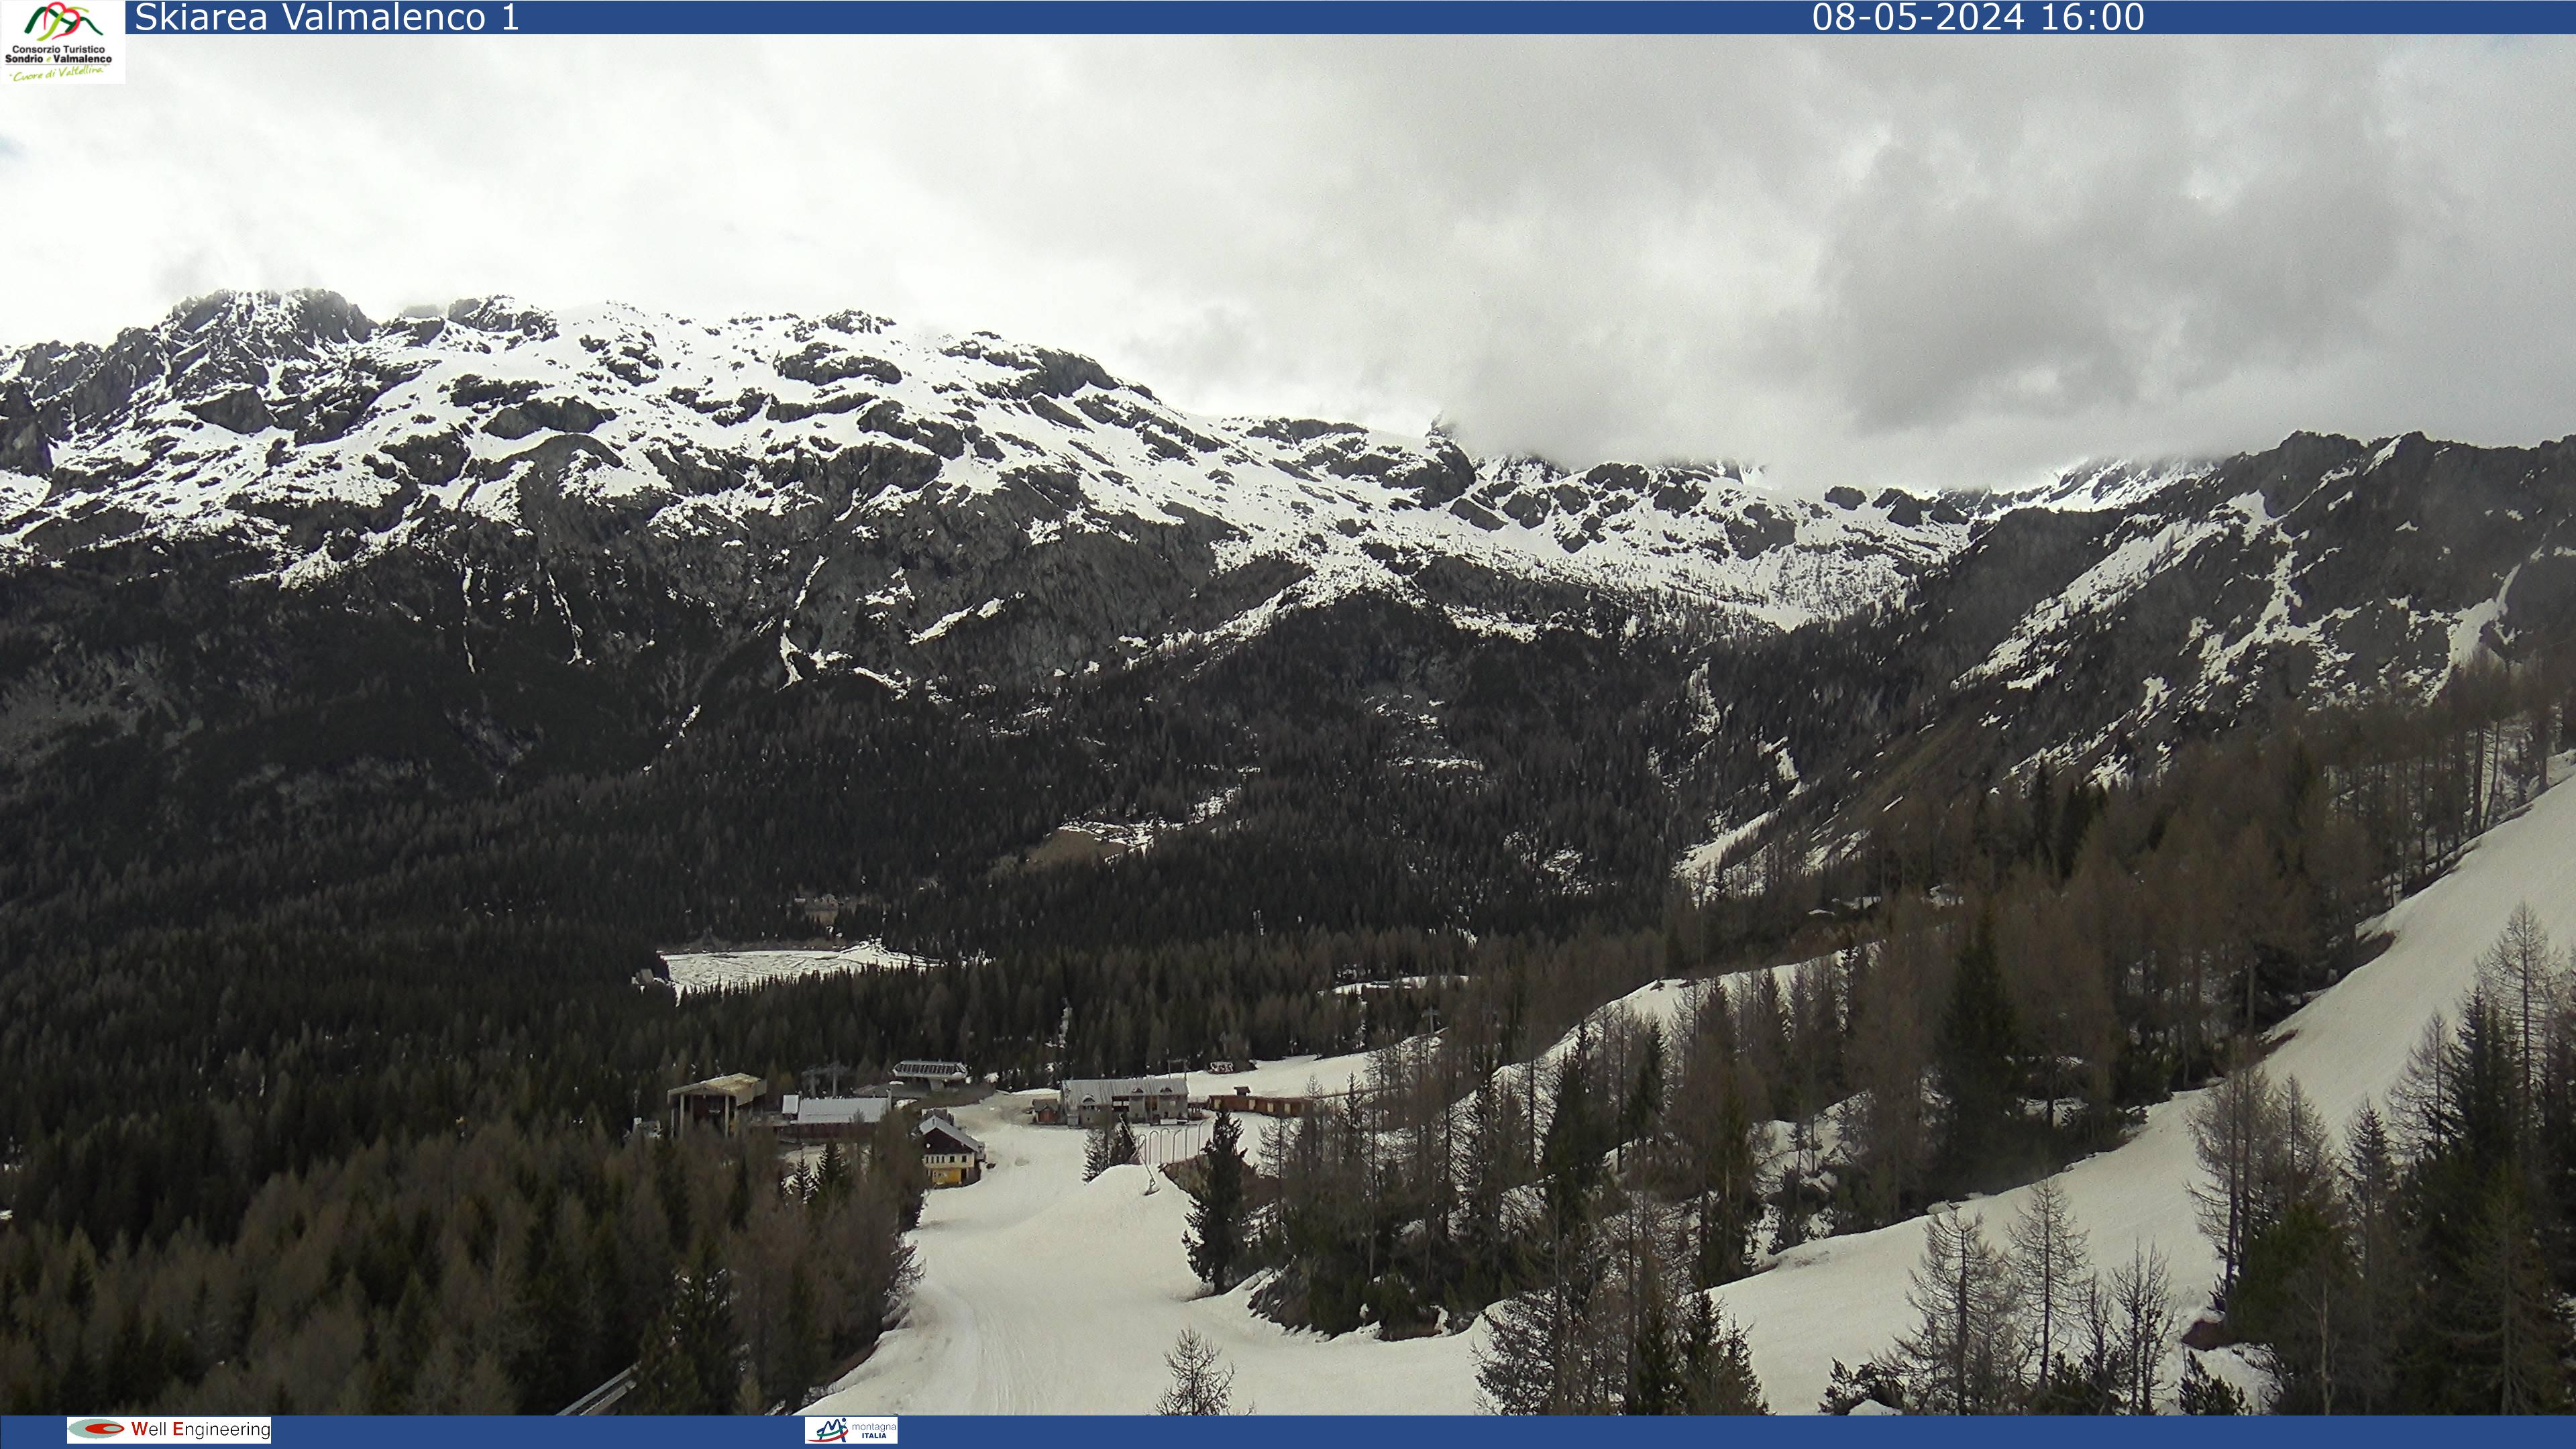 Webcam di Valmalenco Ski area: Alpe Palù